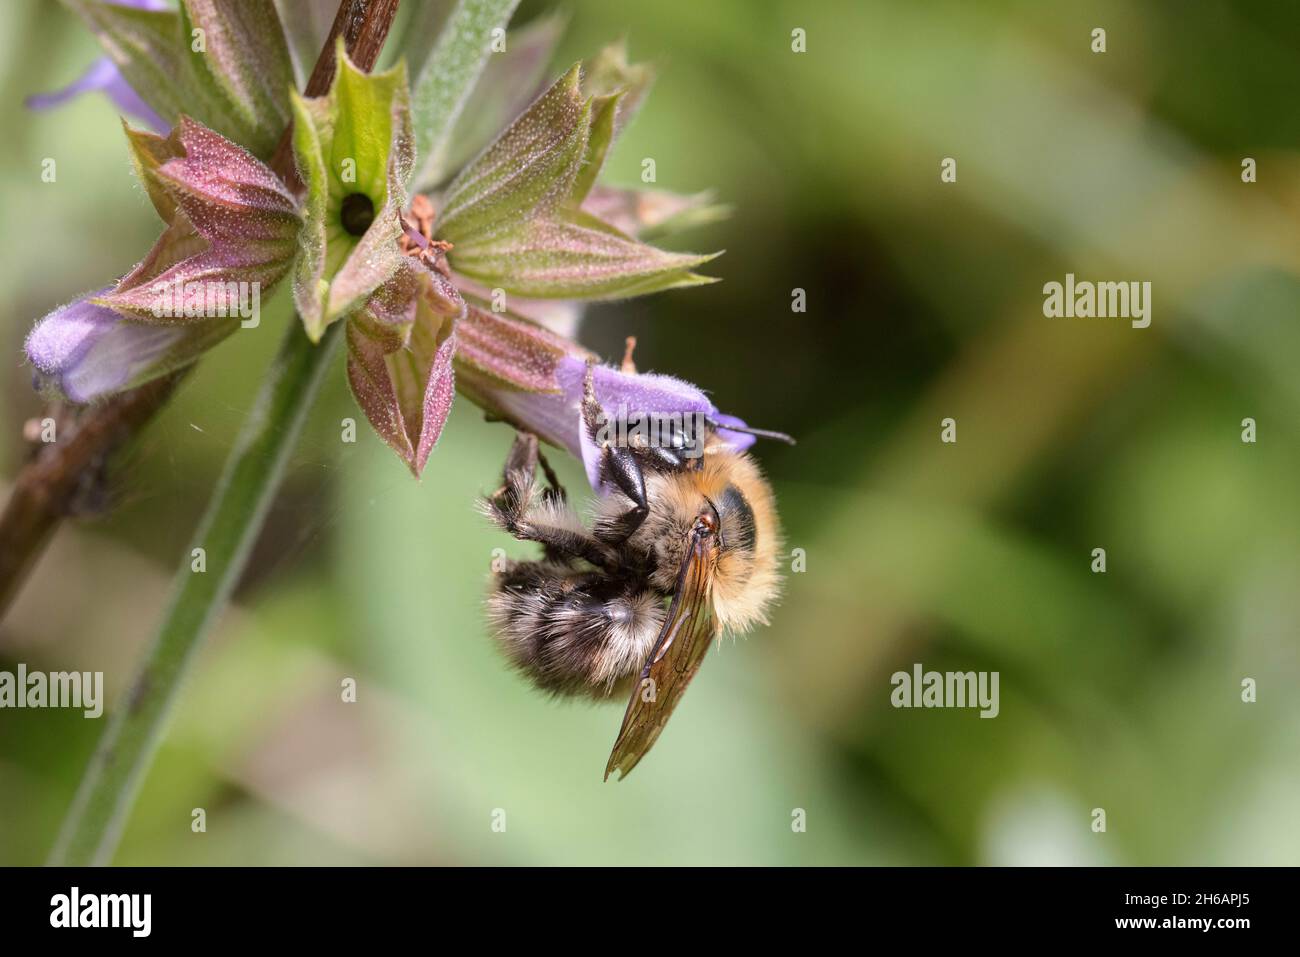 Ackerhummel (Bombus pascuorum), Common Carder Bee Stock Photo